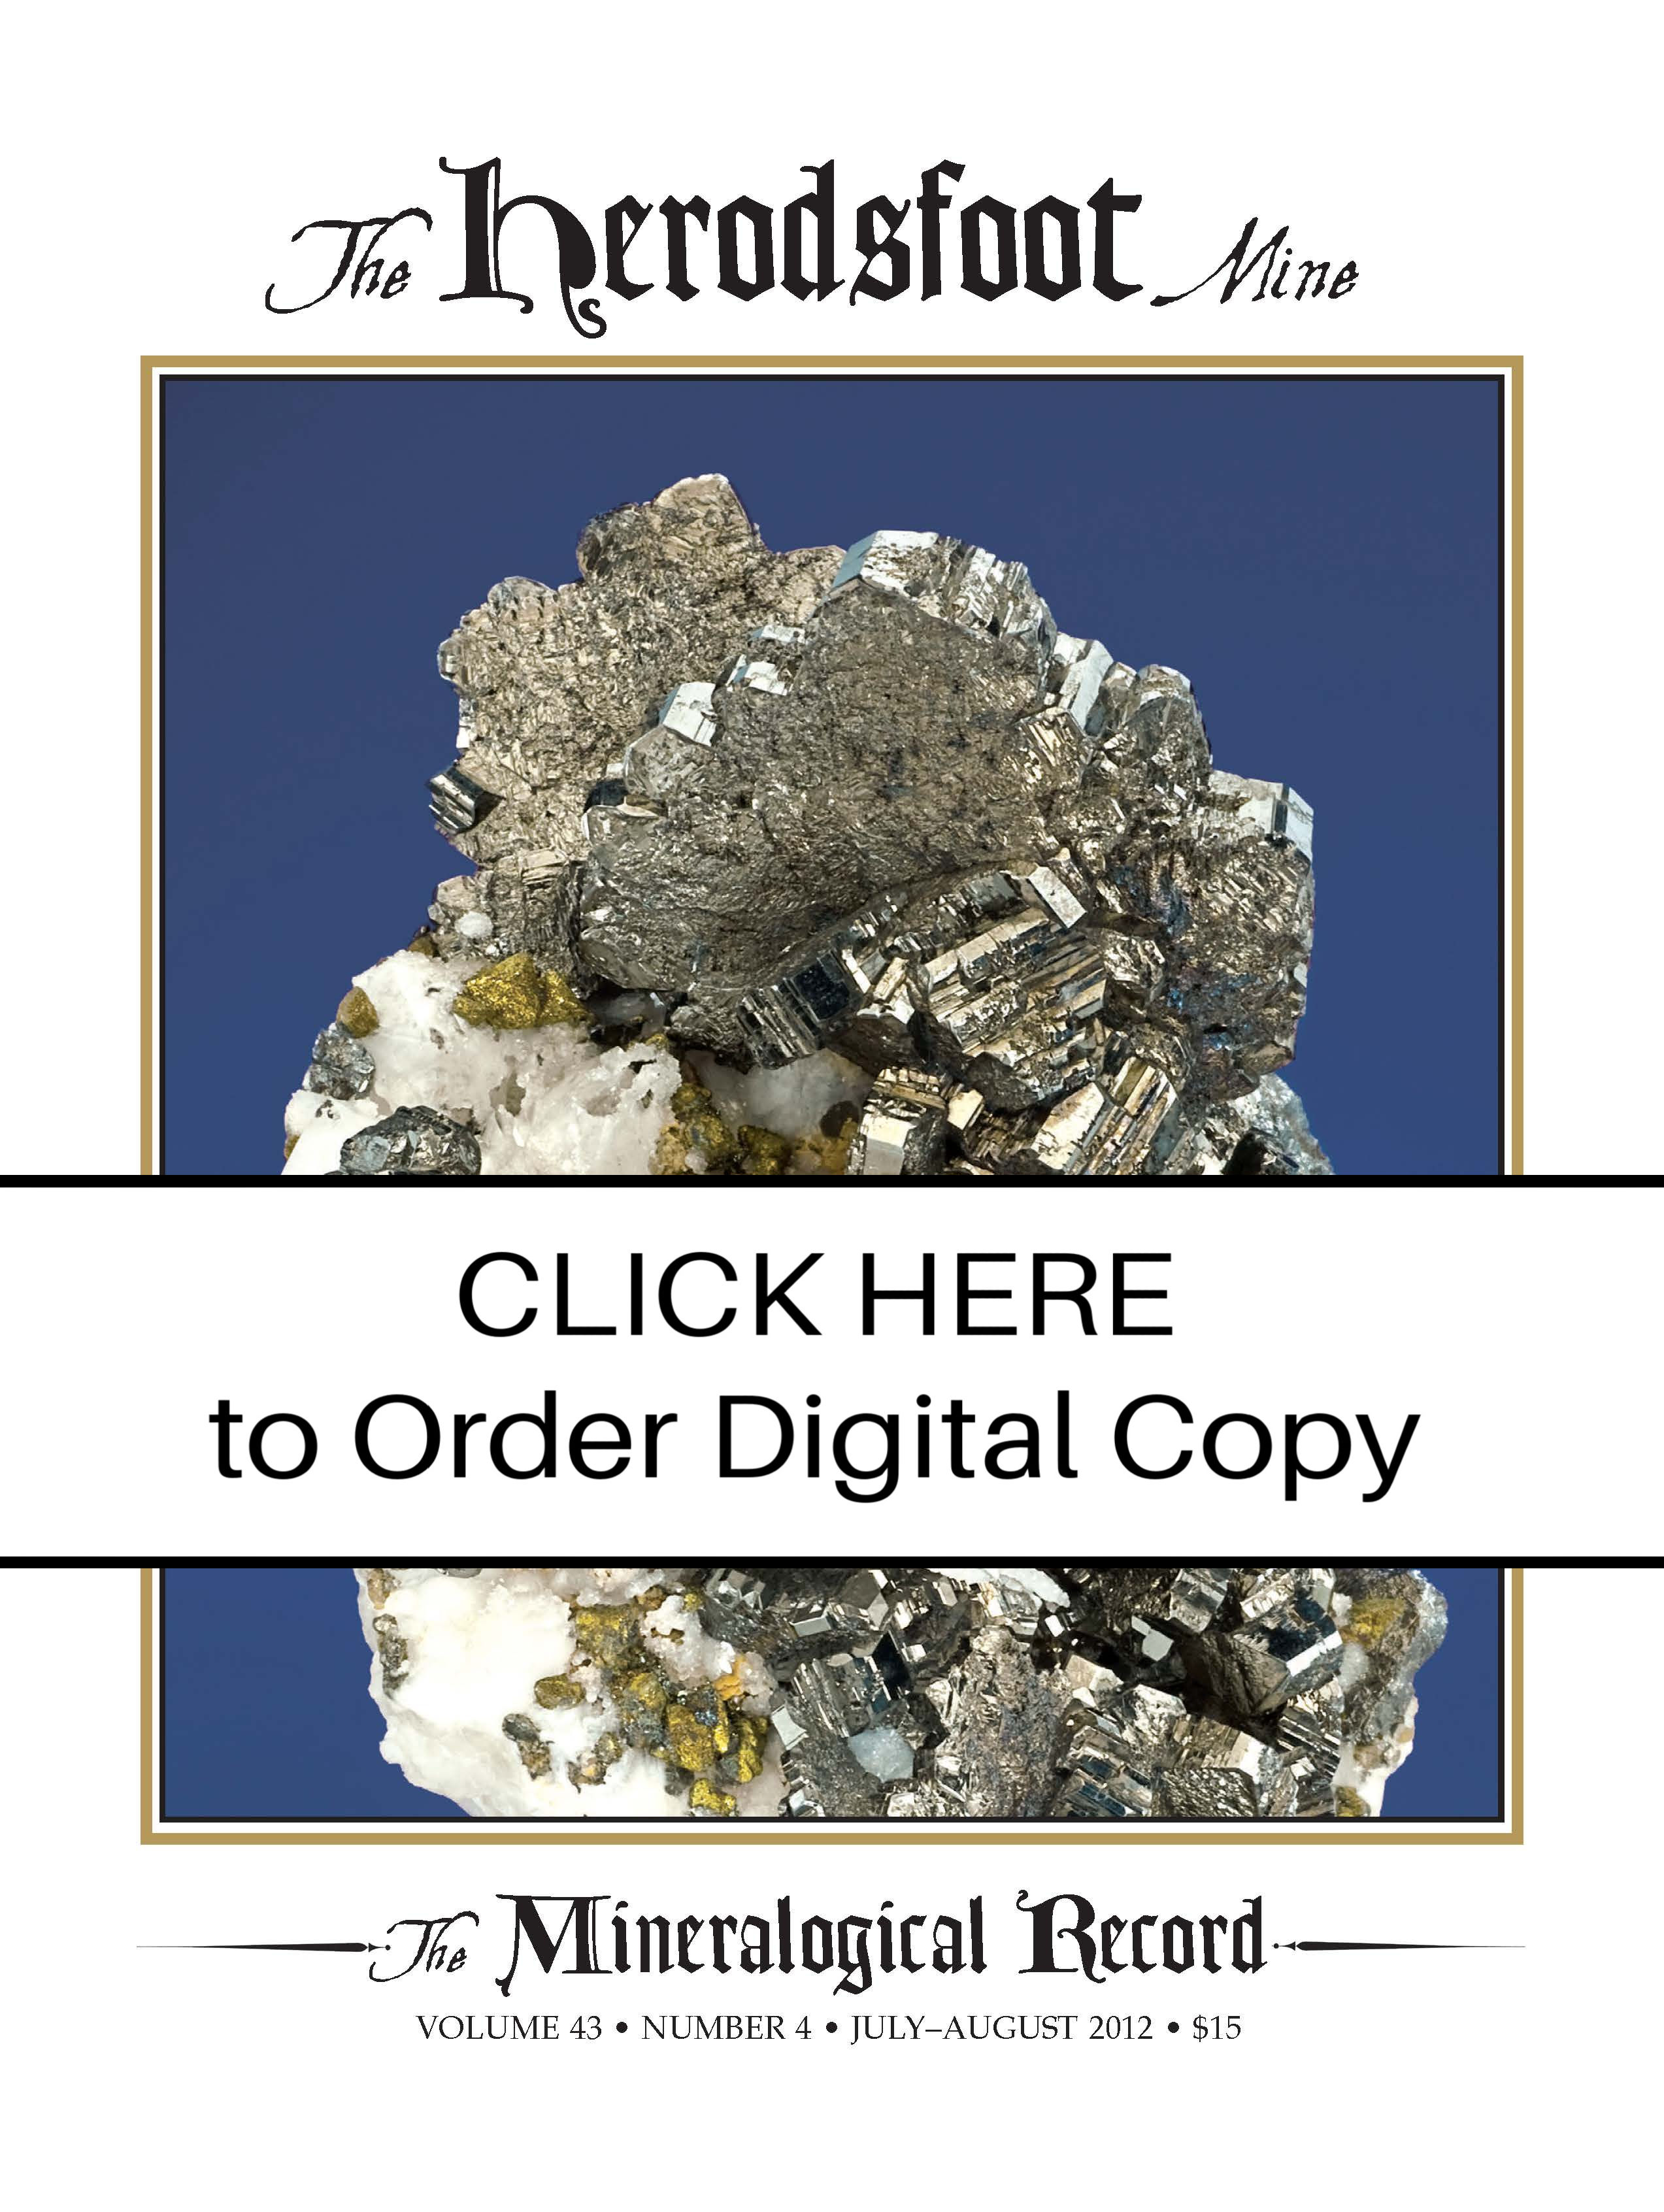 DIGITAL Herodsfoot Mine, Vol. 43 no 4, Jul-Aug 2012